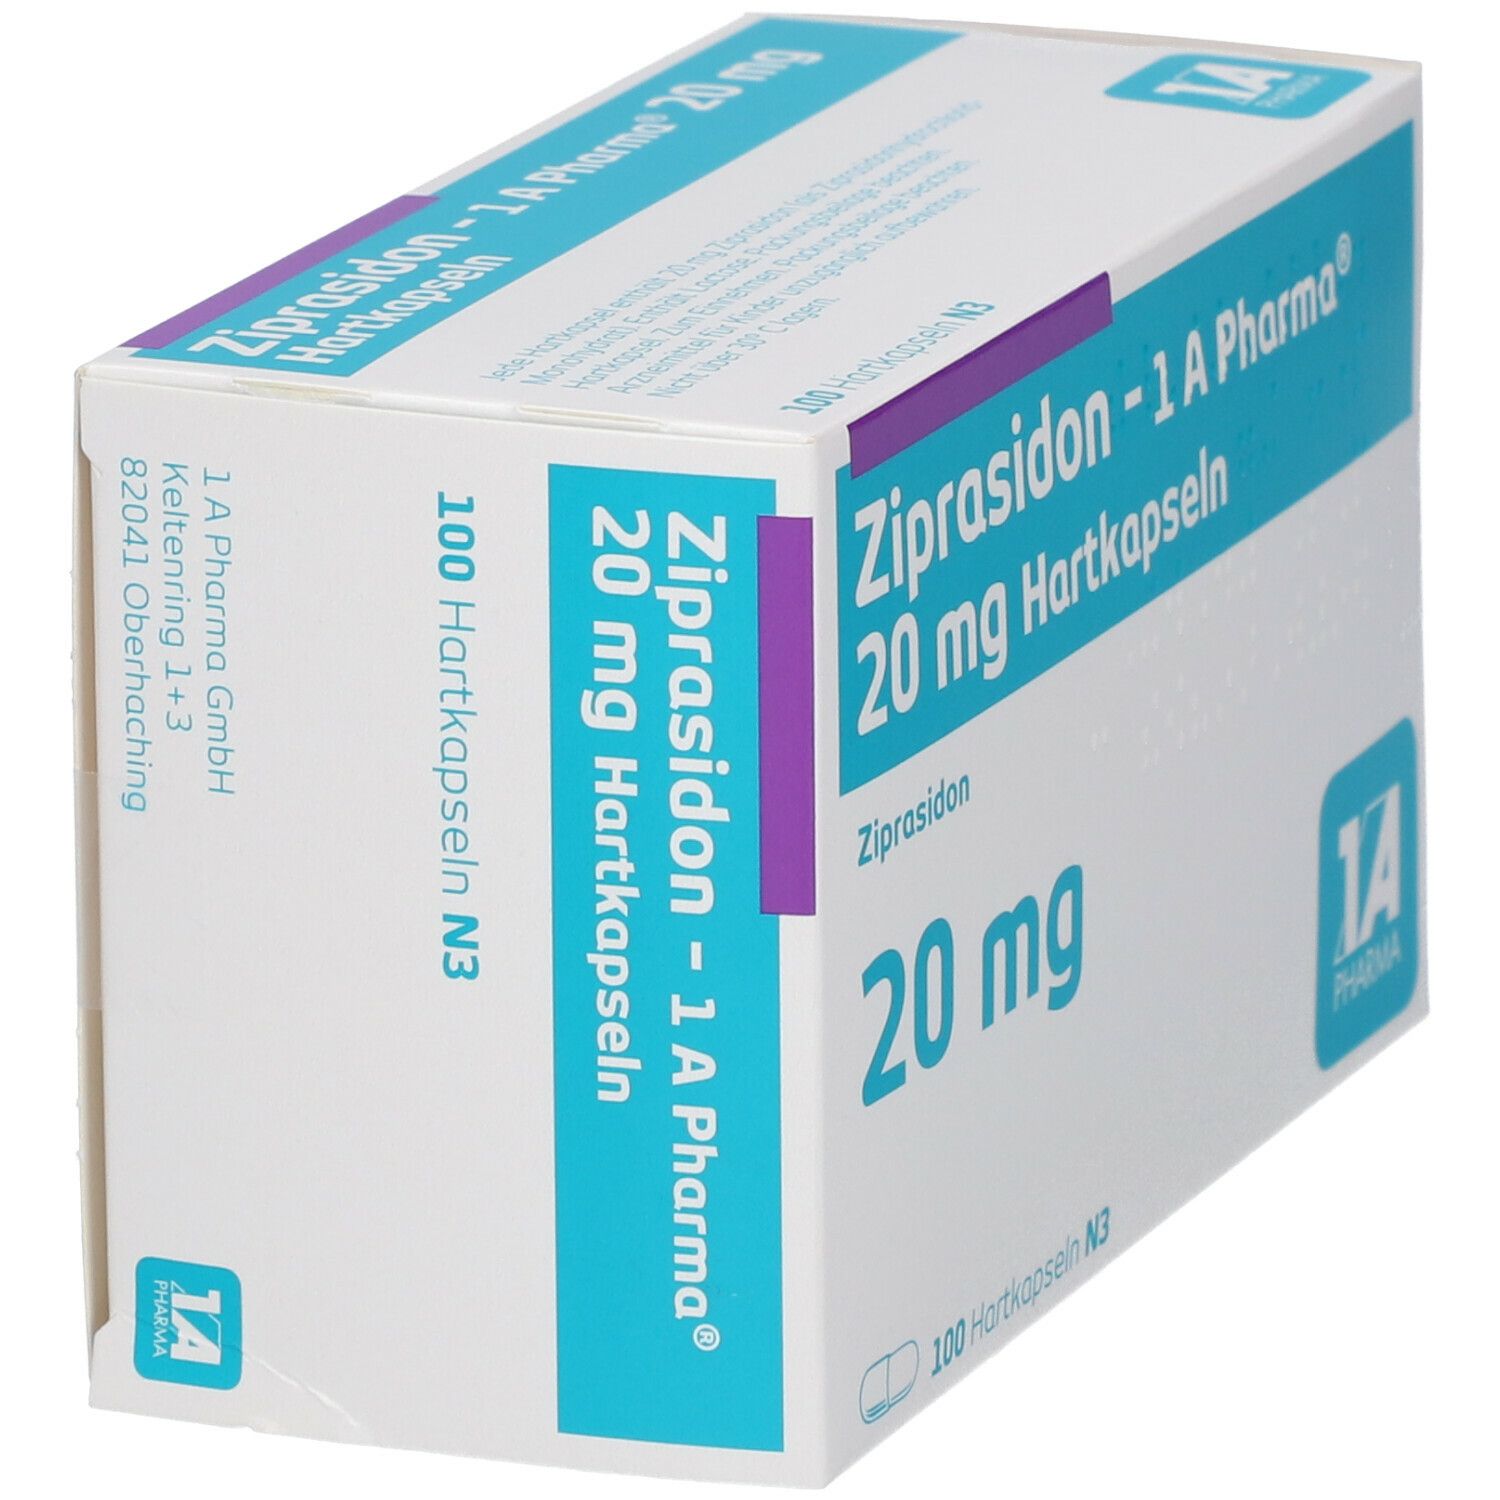 Ziprasidon - 1 A Pharma® 20 mg